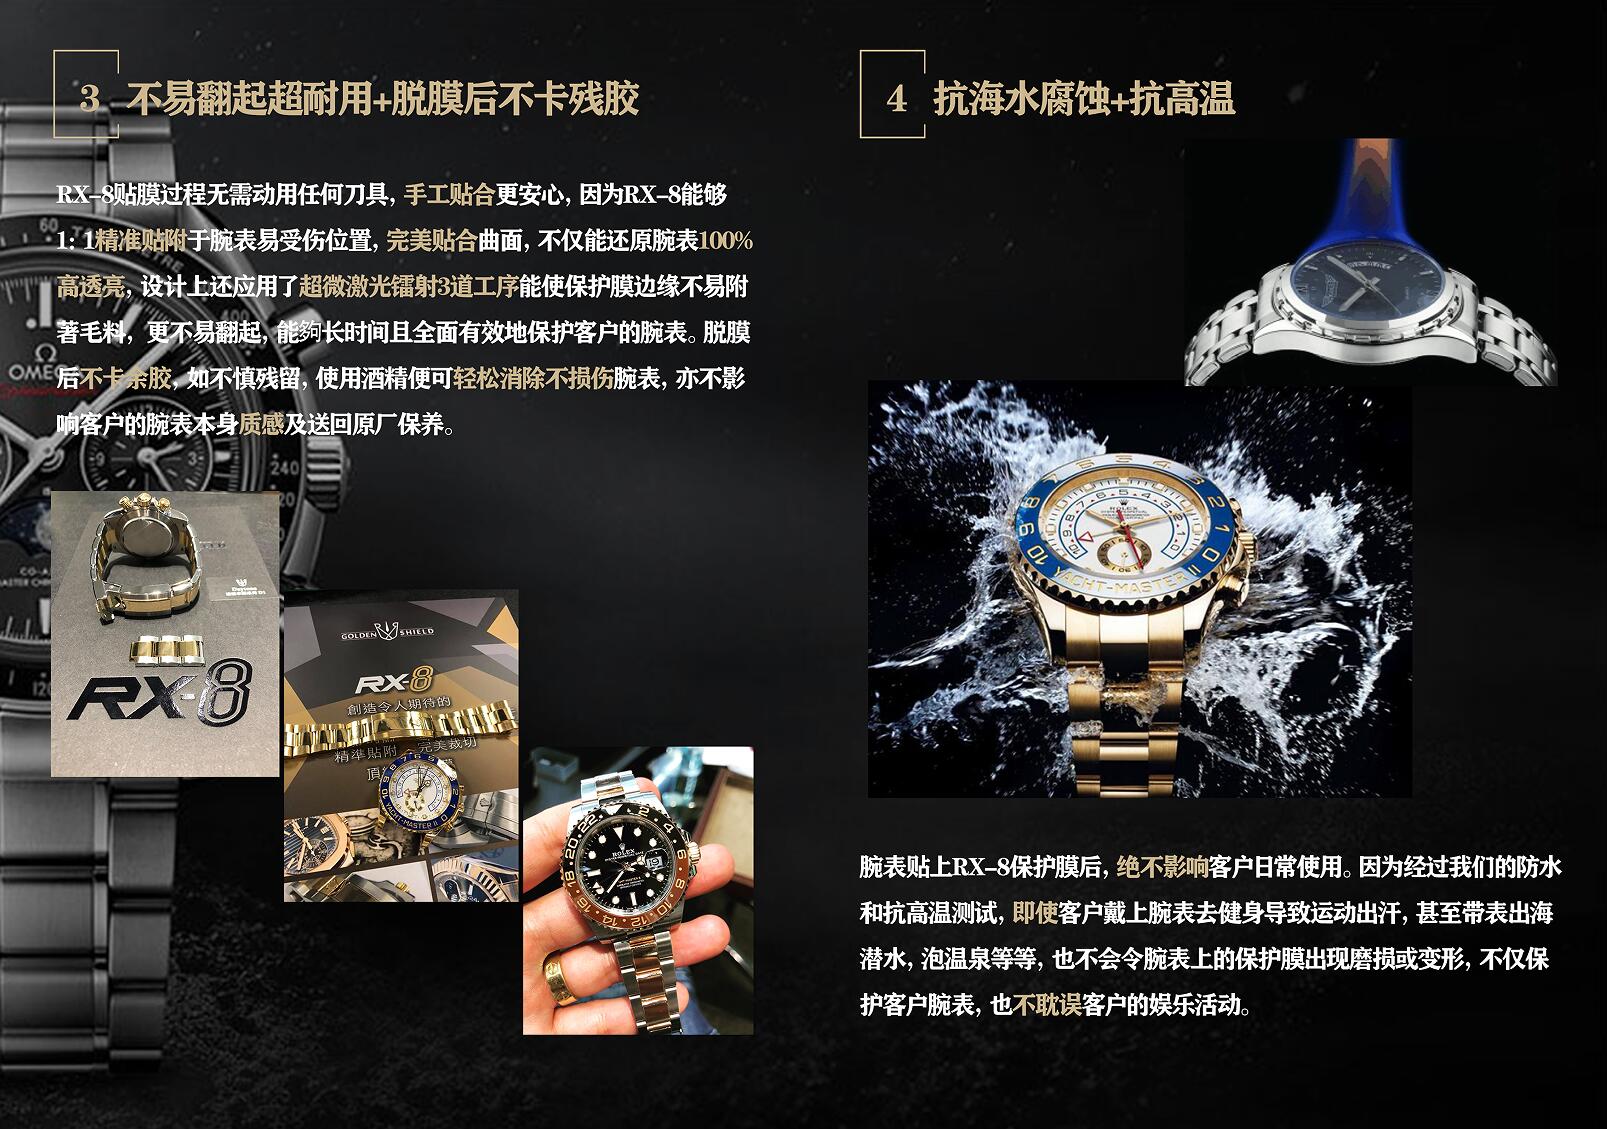 RX-8贴膜 适用于劳力士游艇37MM手表保护膜 外表圈表盘表扣